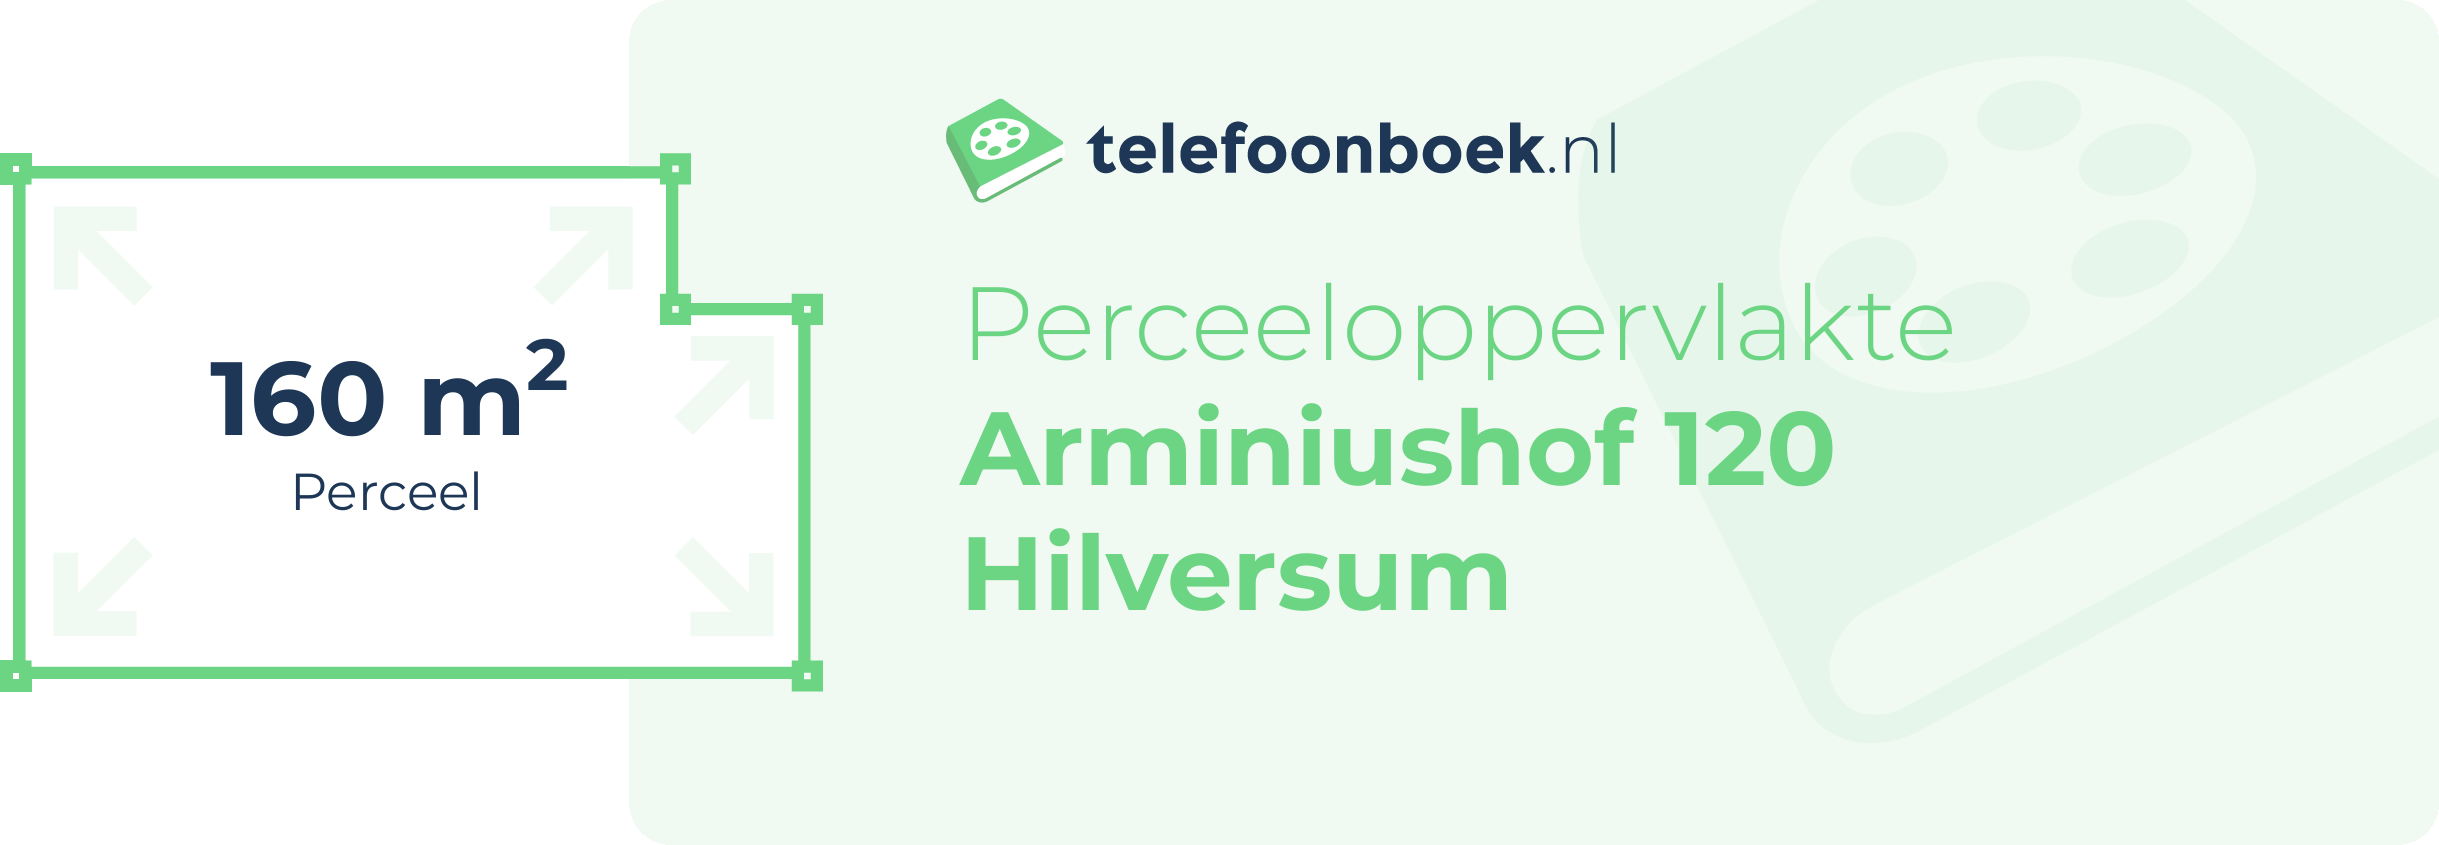 Perceeloppervlakte Arminiushof 120 Hilversum